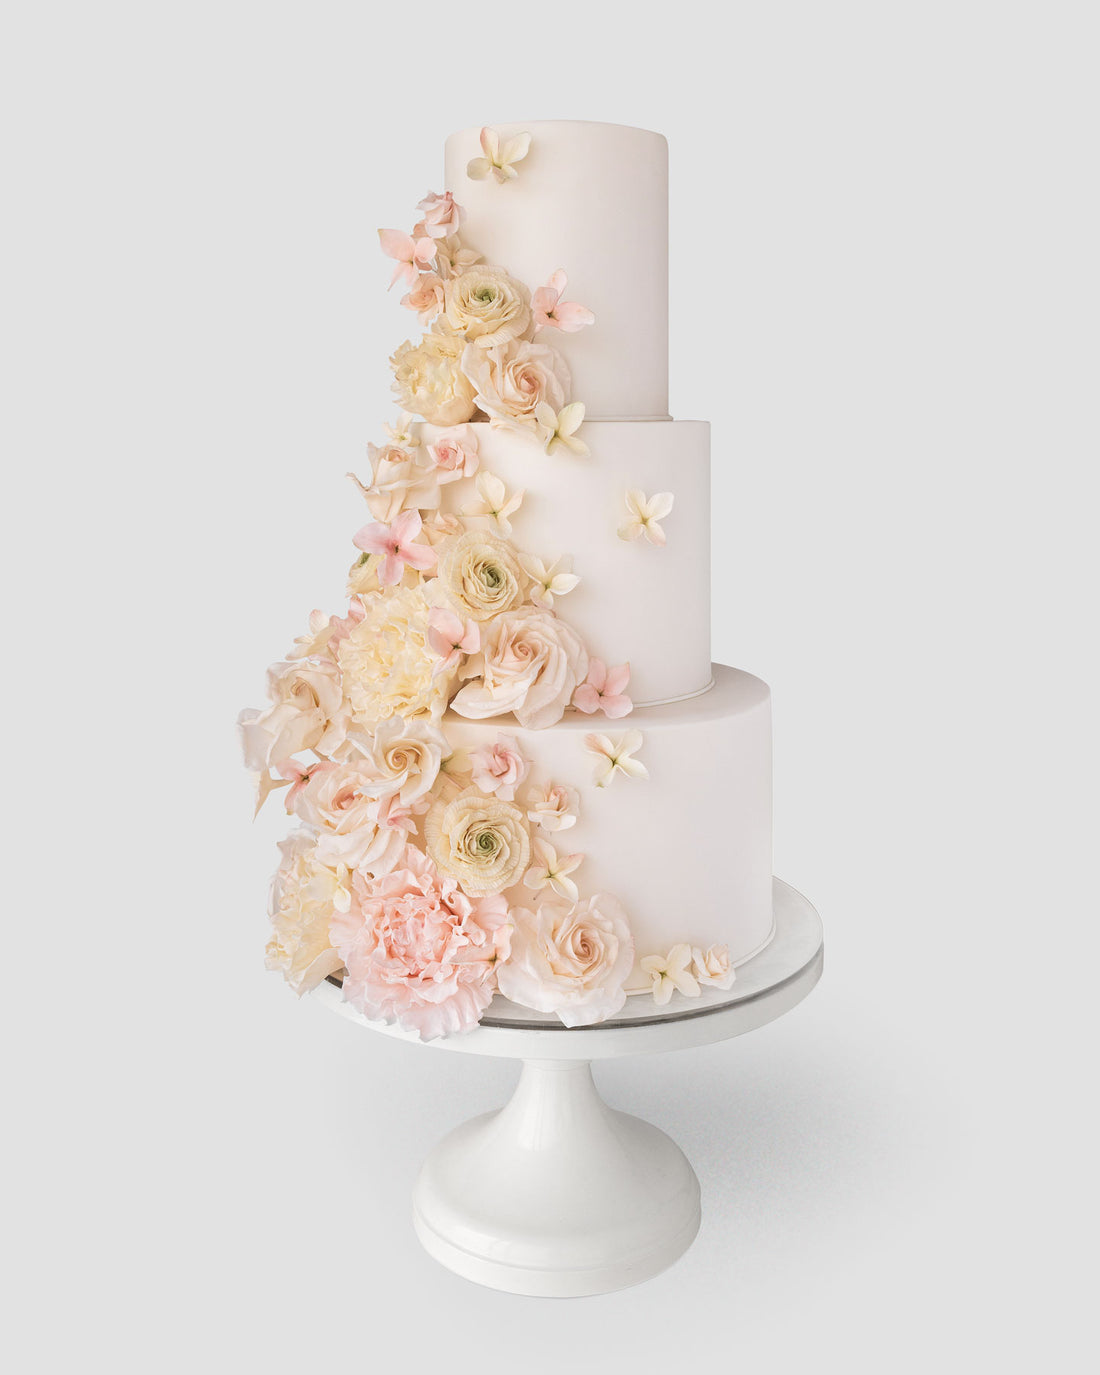 ABSTRACT ART WEDDING CAKE - Decorated Cake by Jessica MV - CakesDecor